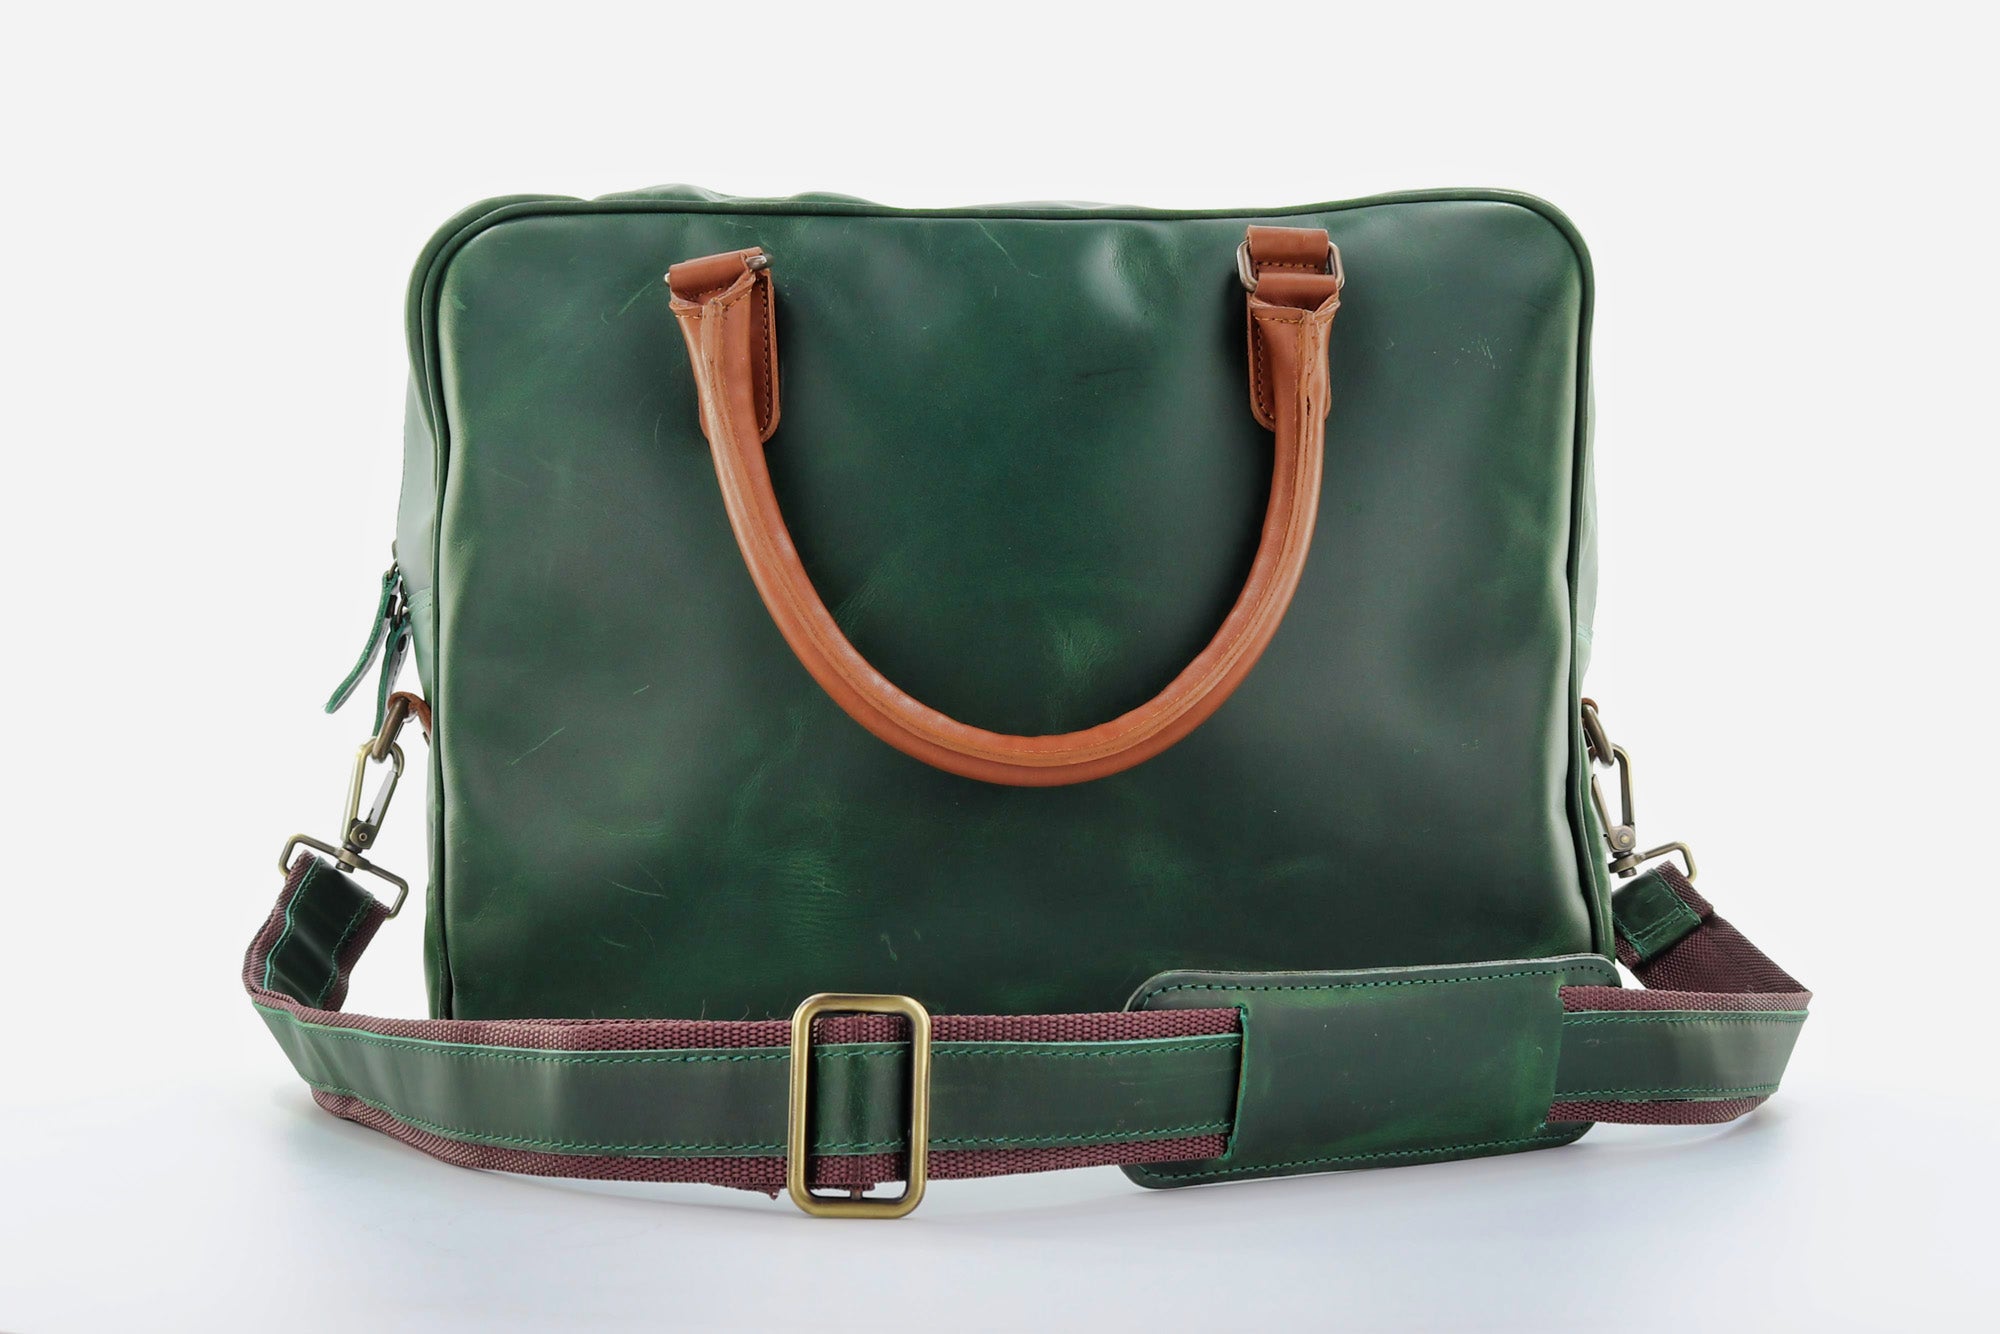 Emerald leather bag - genuine leather bag - messenger bag - emerald green - front view3